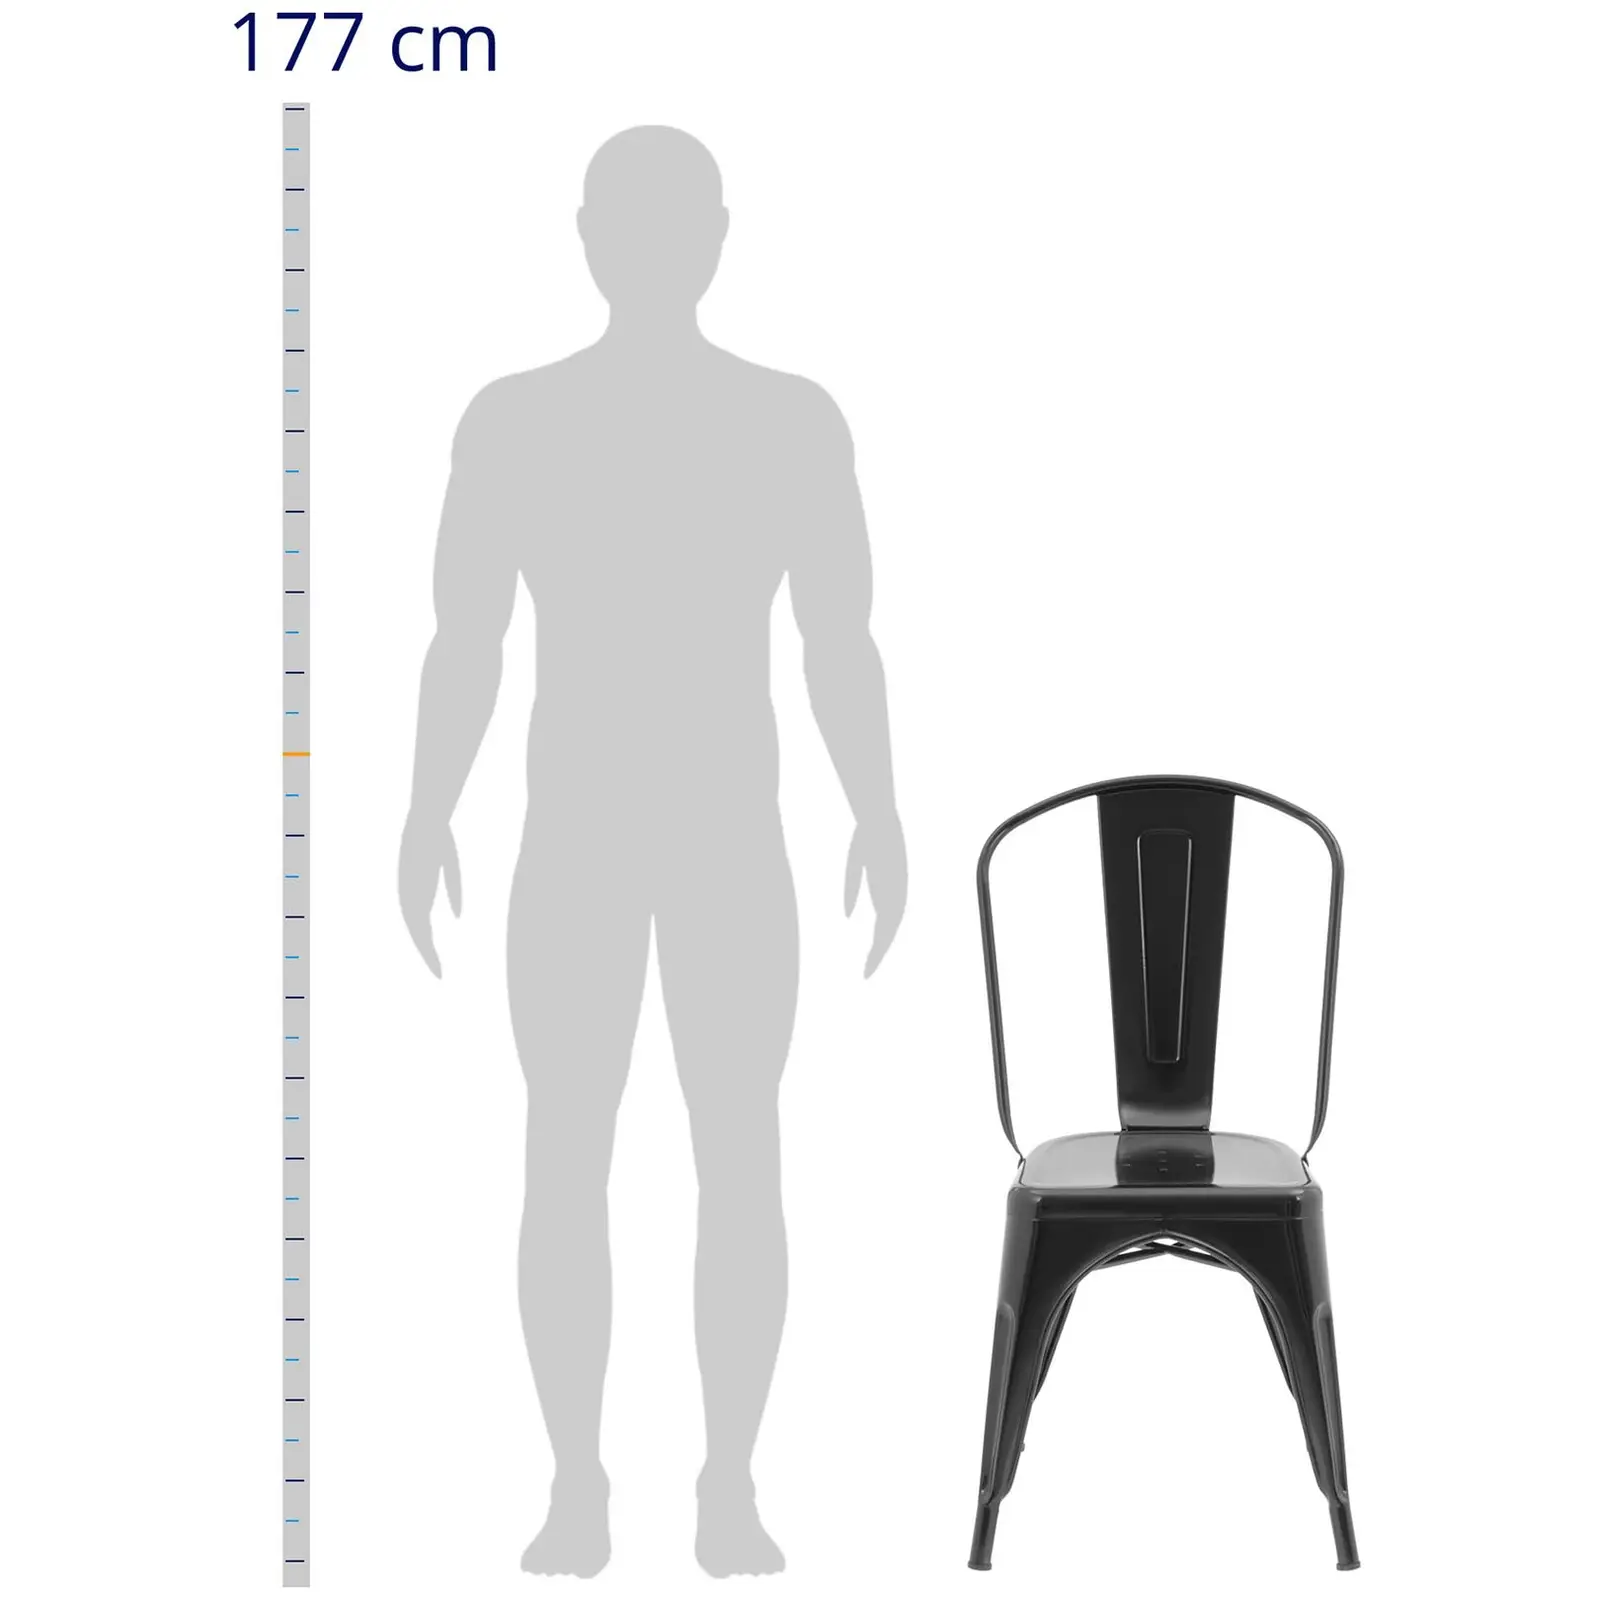 Метален стол - комплект от 2 броя - до 150 кг - седалка 35 x 34 см - кафяв - Royal Catering